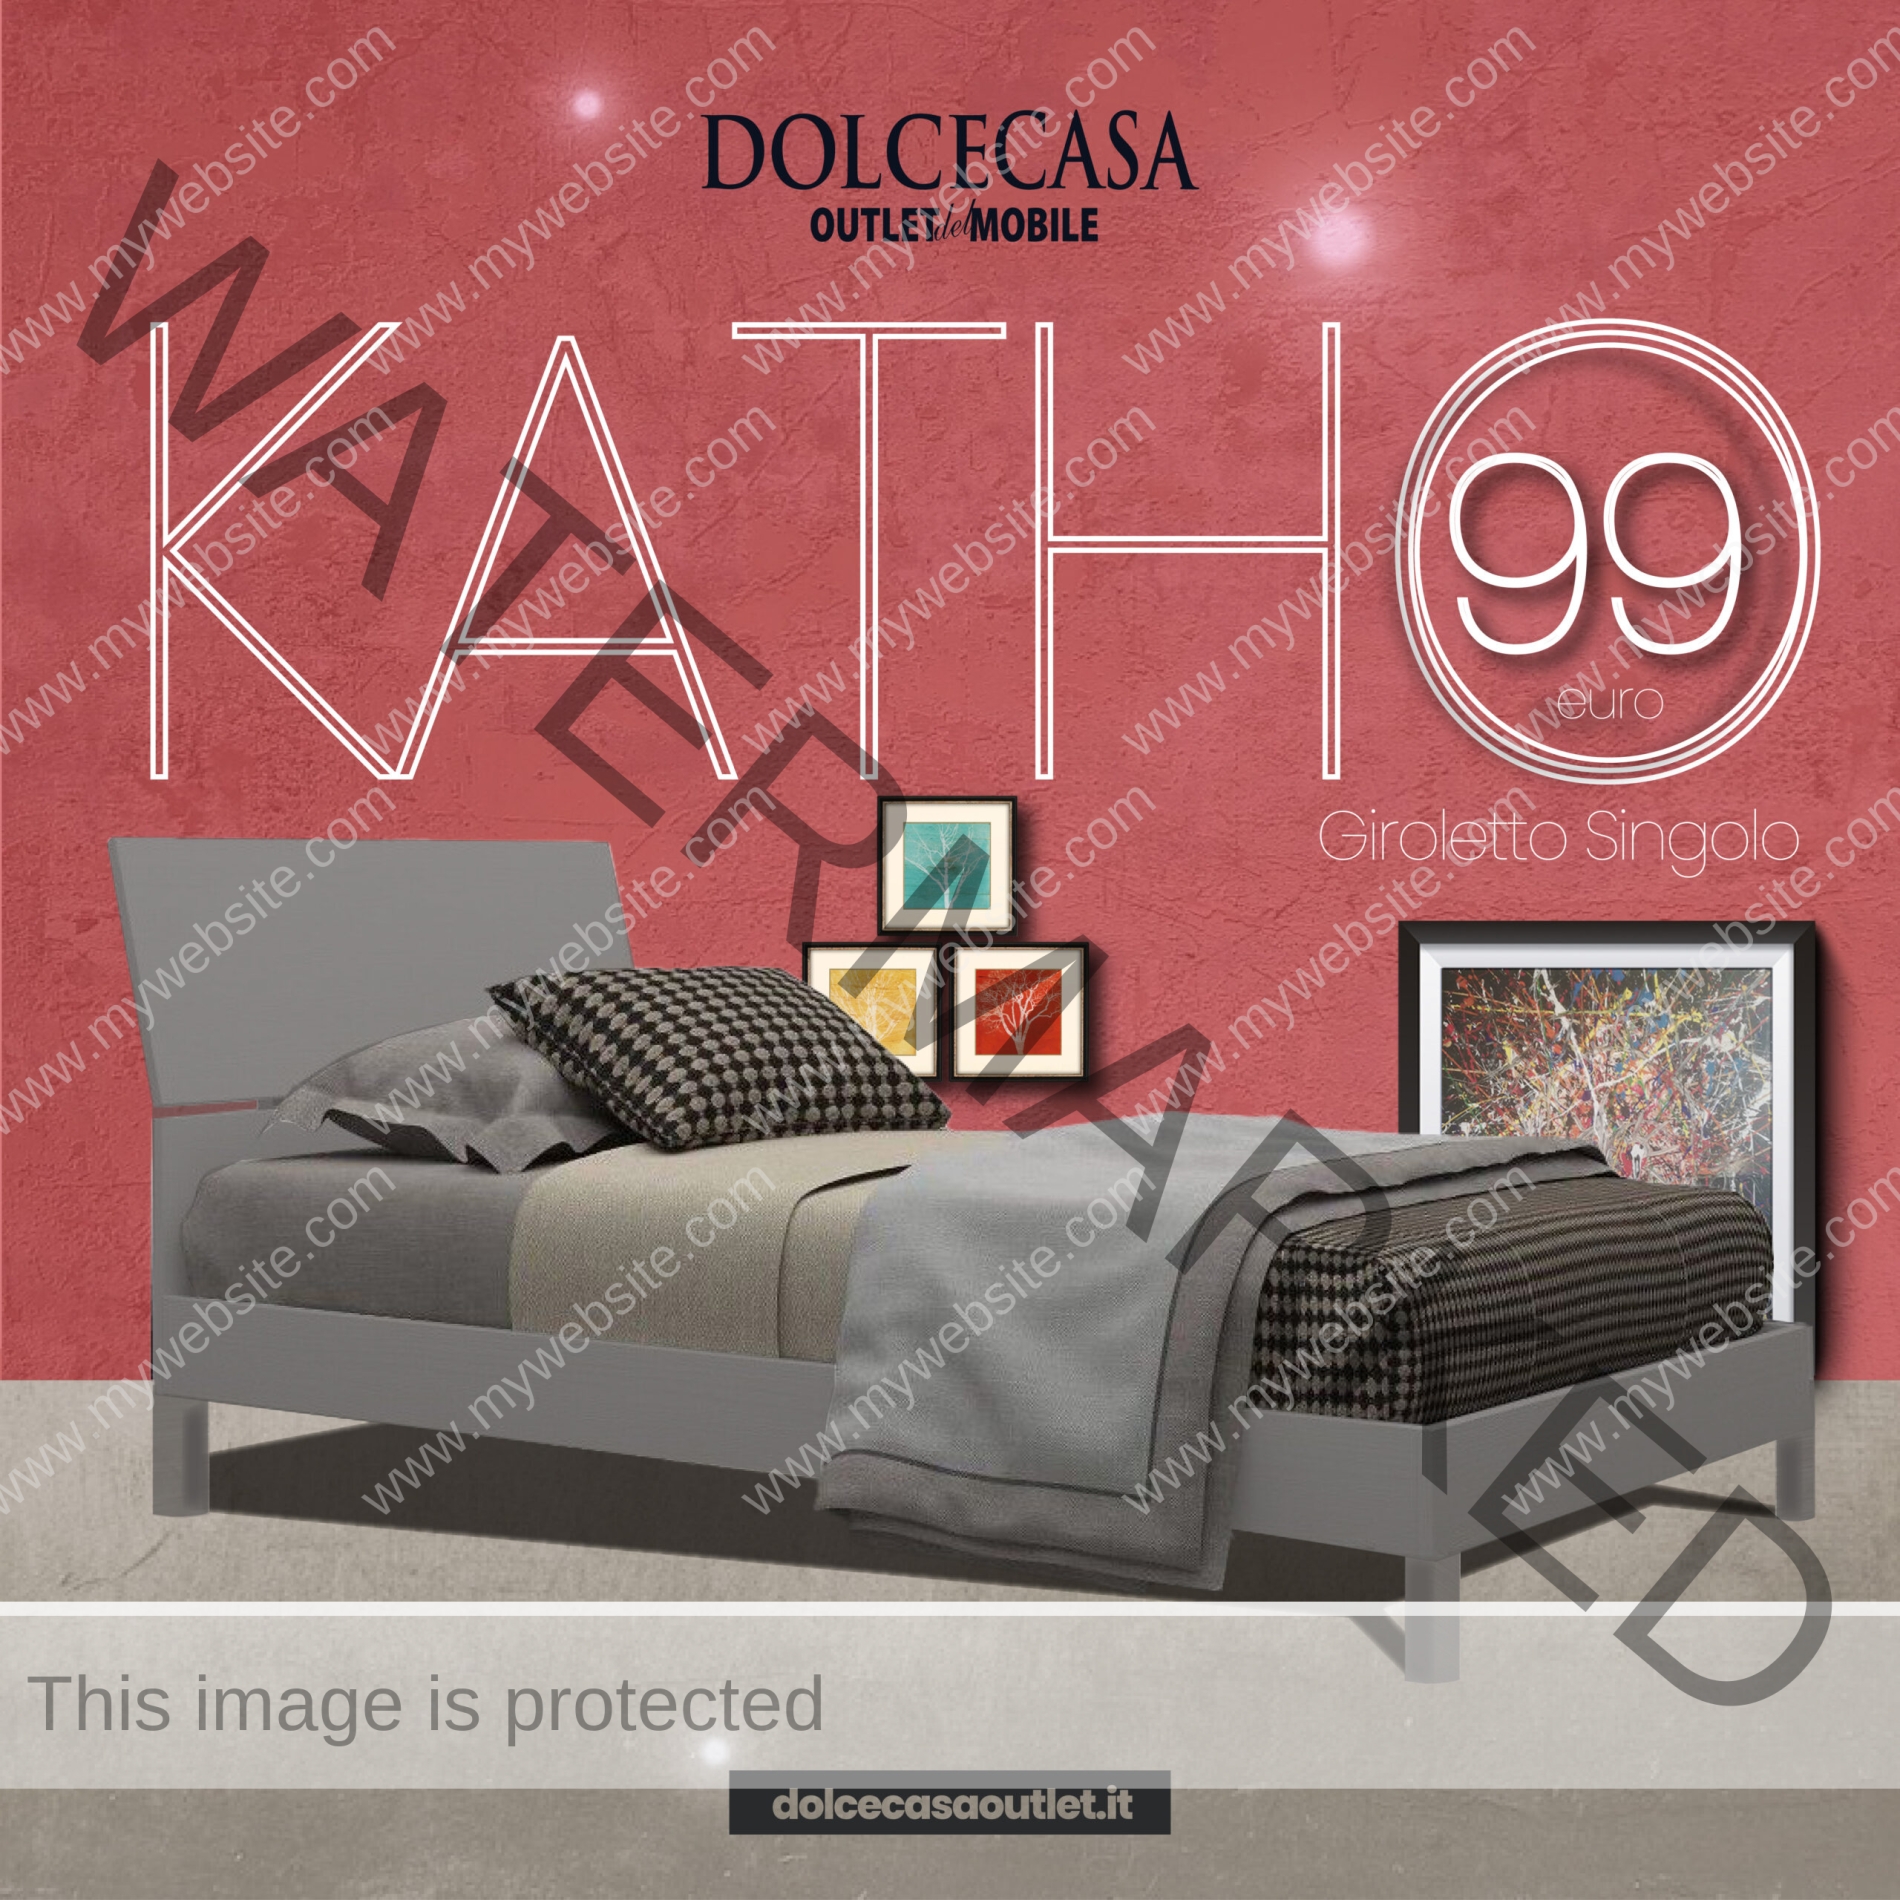 KATHO 80 giroLETTO SOCIAL-01